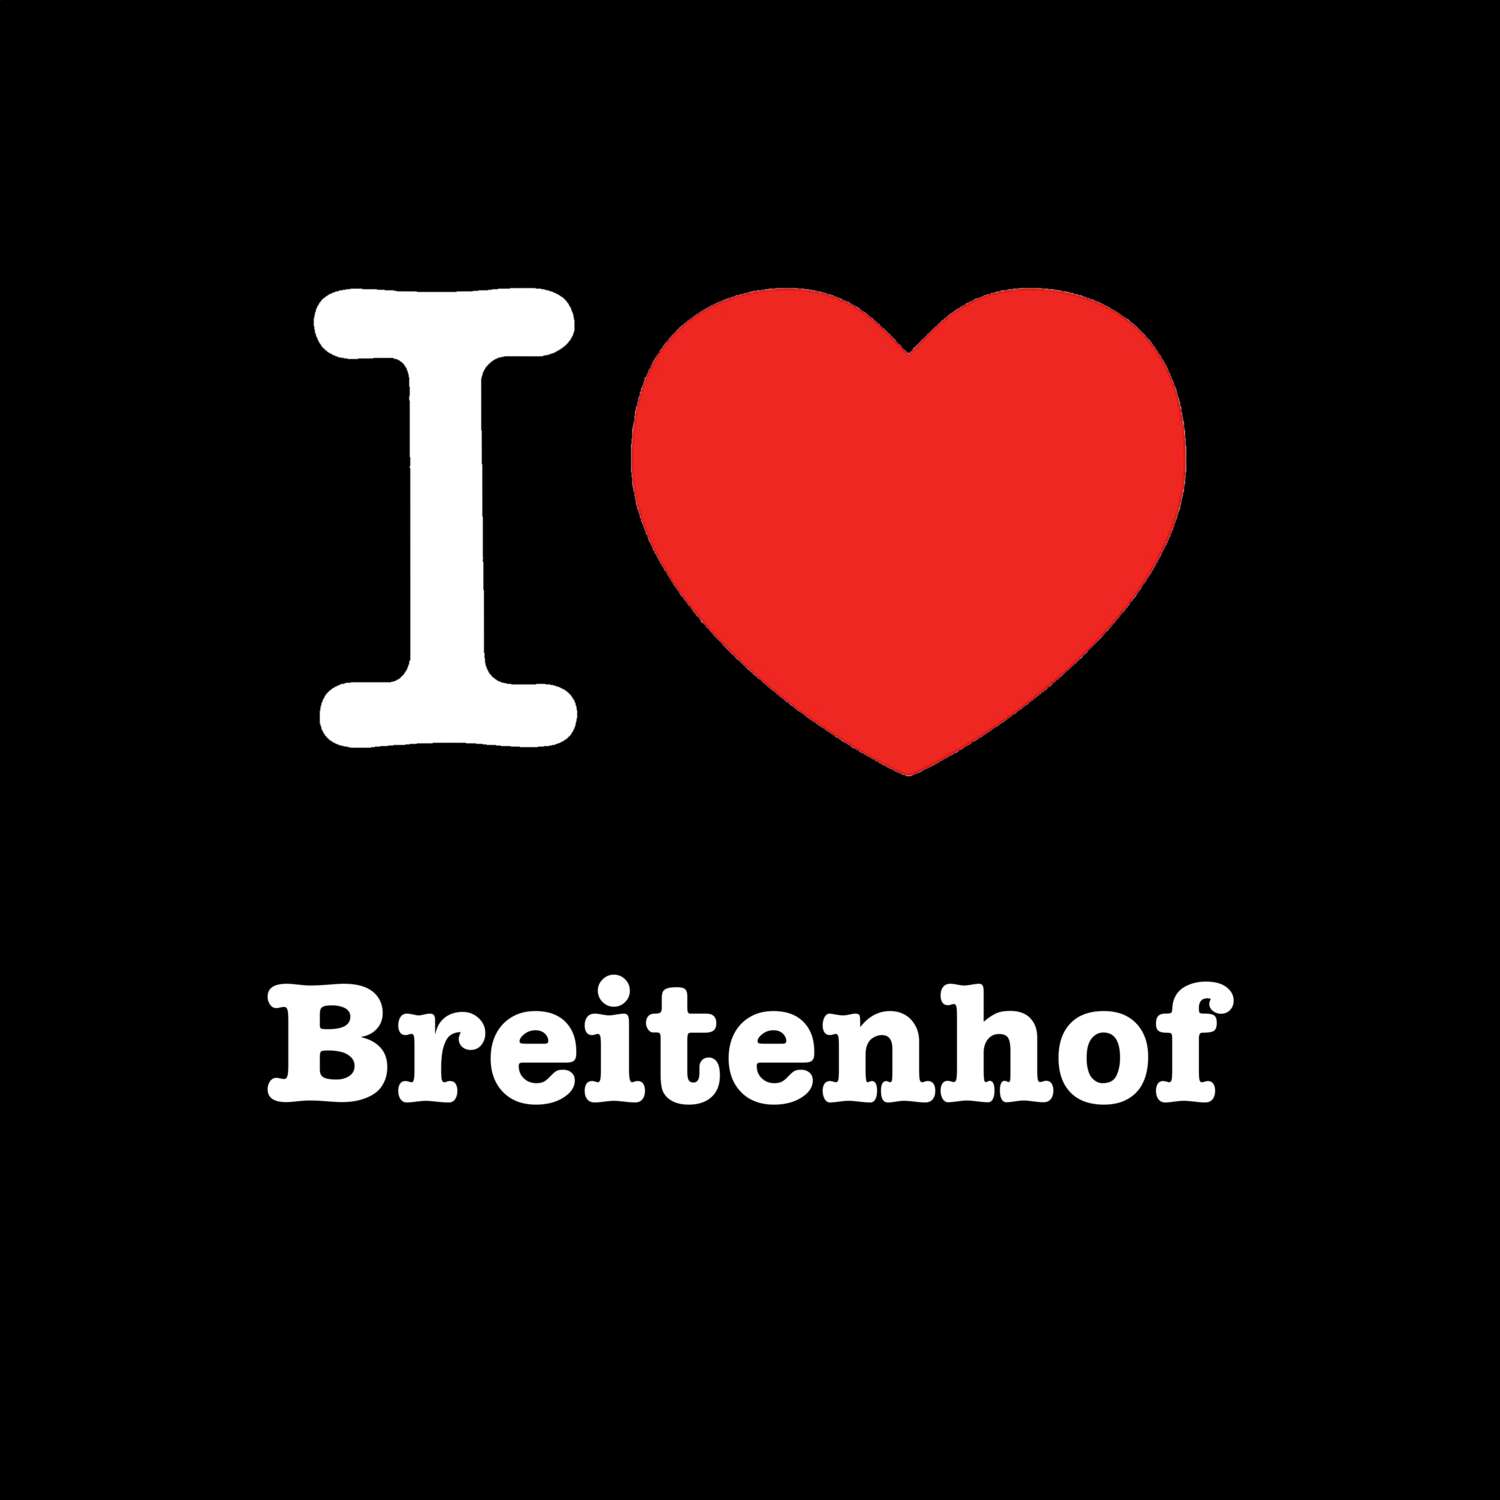 Breitenhof T-Shirt »I love«